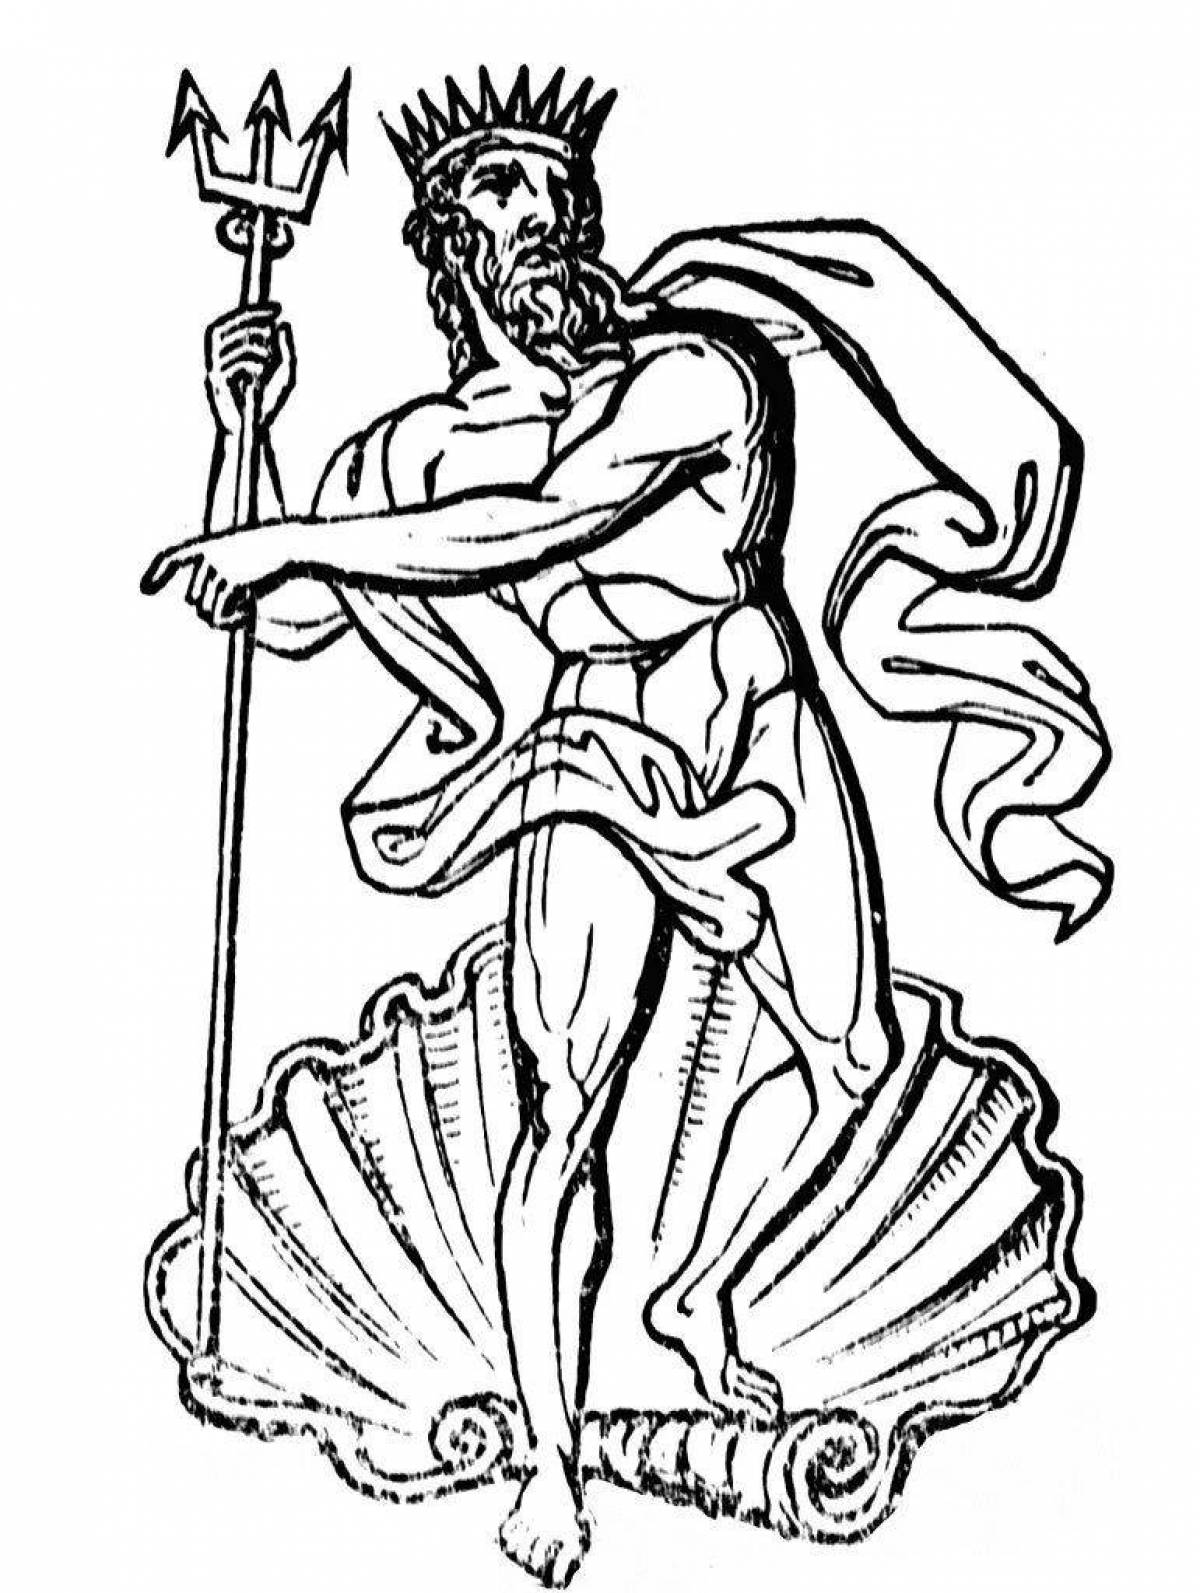 Бог рима нептун. Римский Бог Нептун. Нептун Бог Рима. Бог Греции Посейдон. Римский Бог Нептун рисунок.